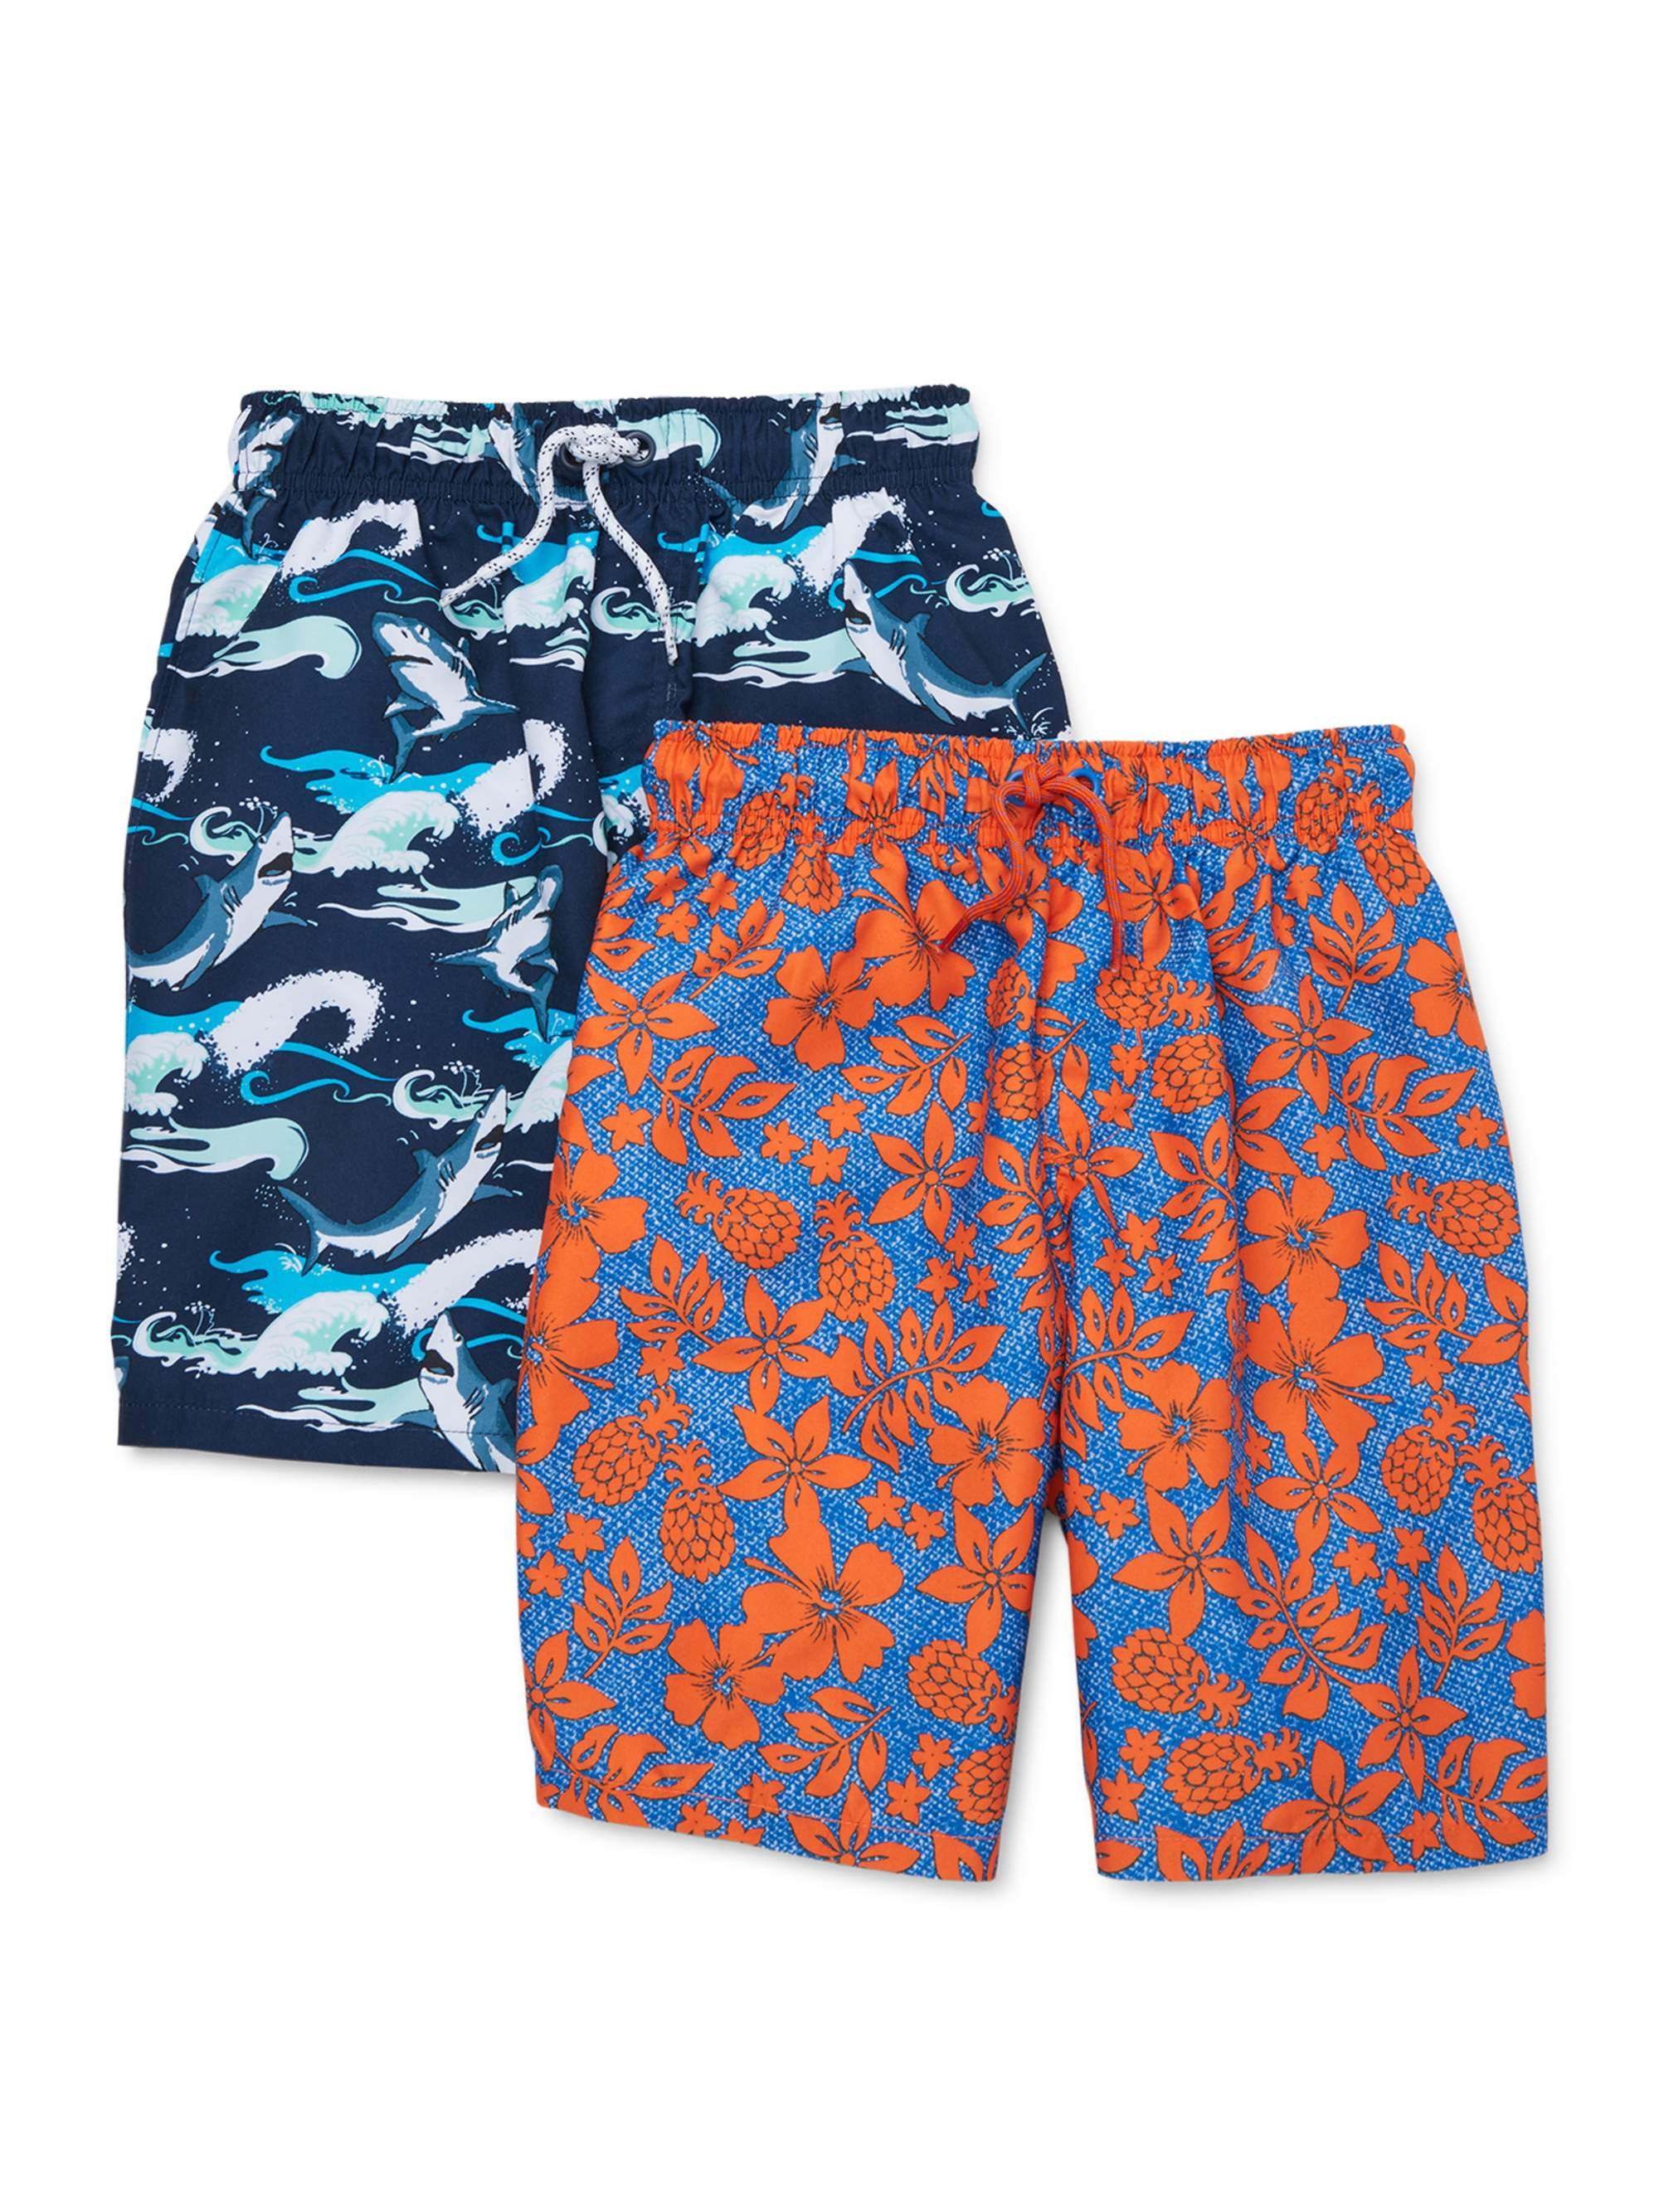 Topanga Bandeau Blouson Top Swimwear Caribbean Blue Sizes size 16 or 18